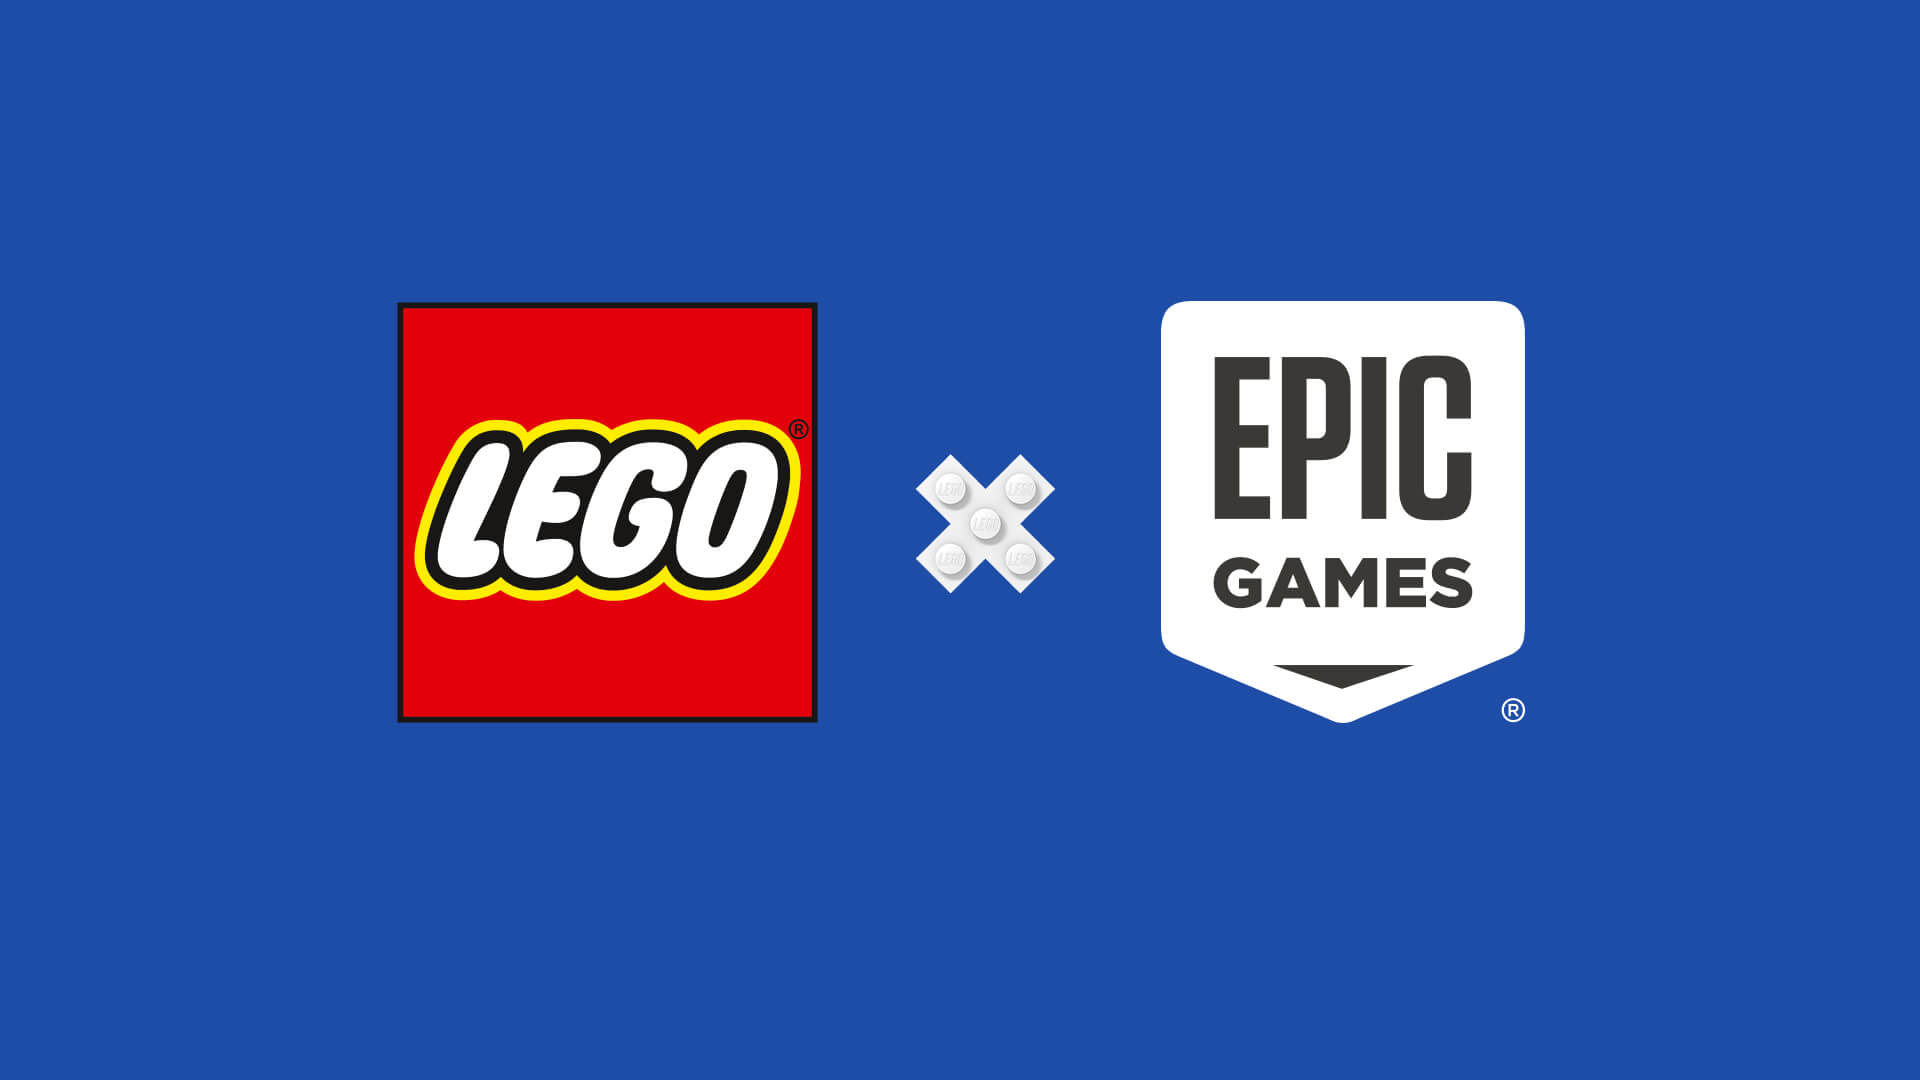 alt="LEGO x Epic"